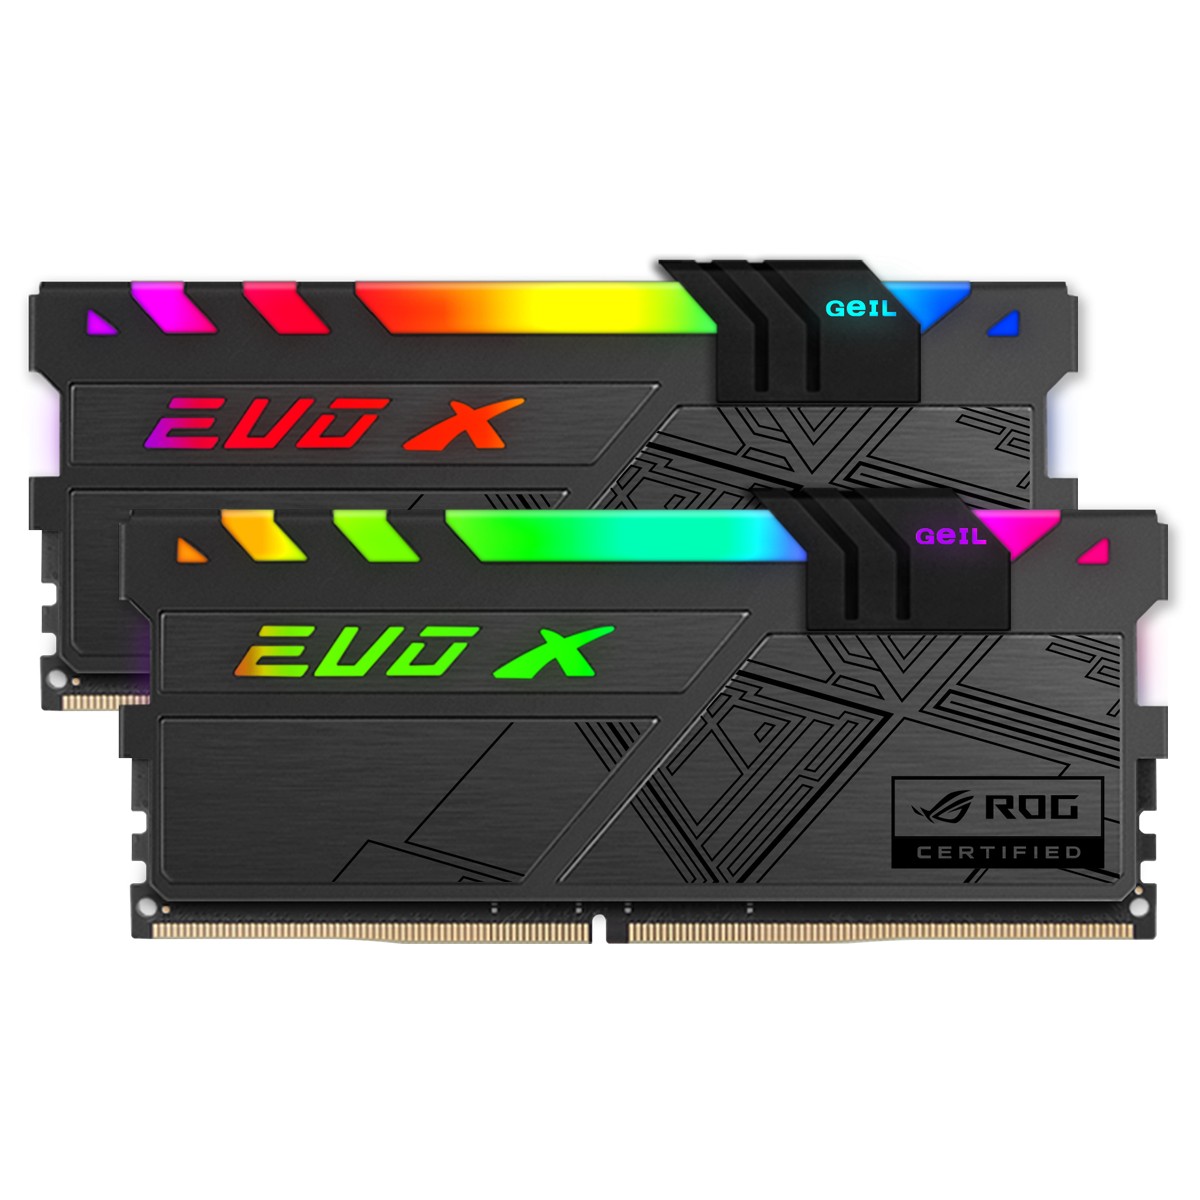 Memória DDR4 Geil EVO X II RGB, 16GB (2x8GB) 3600MHz, ROG CERTIFIED, Black, GREXSR416GB3600C18ADC